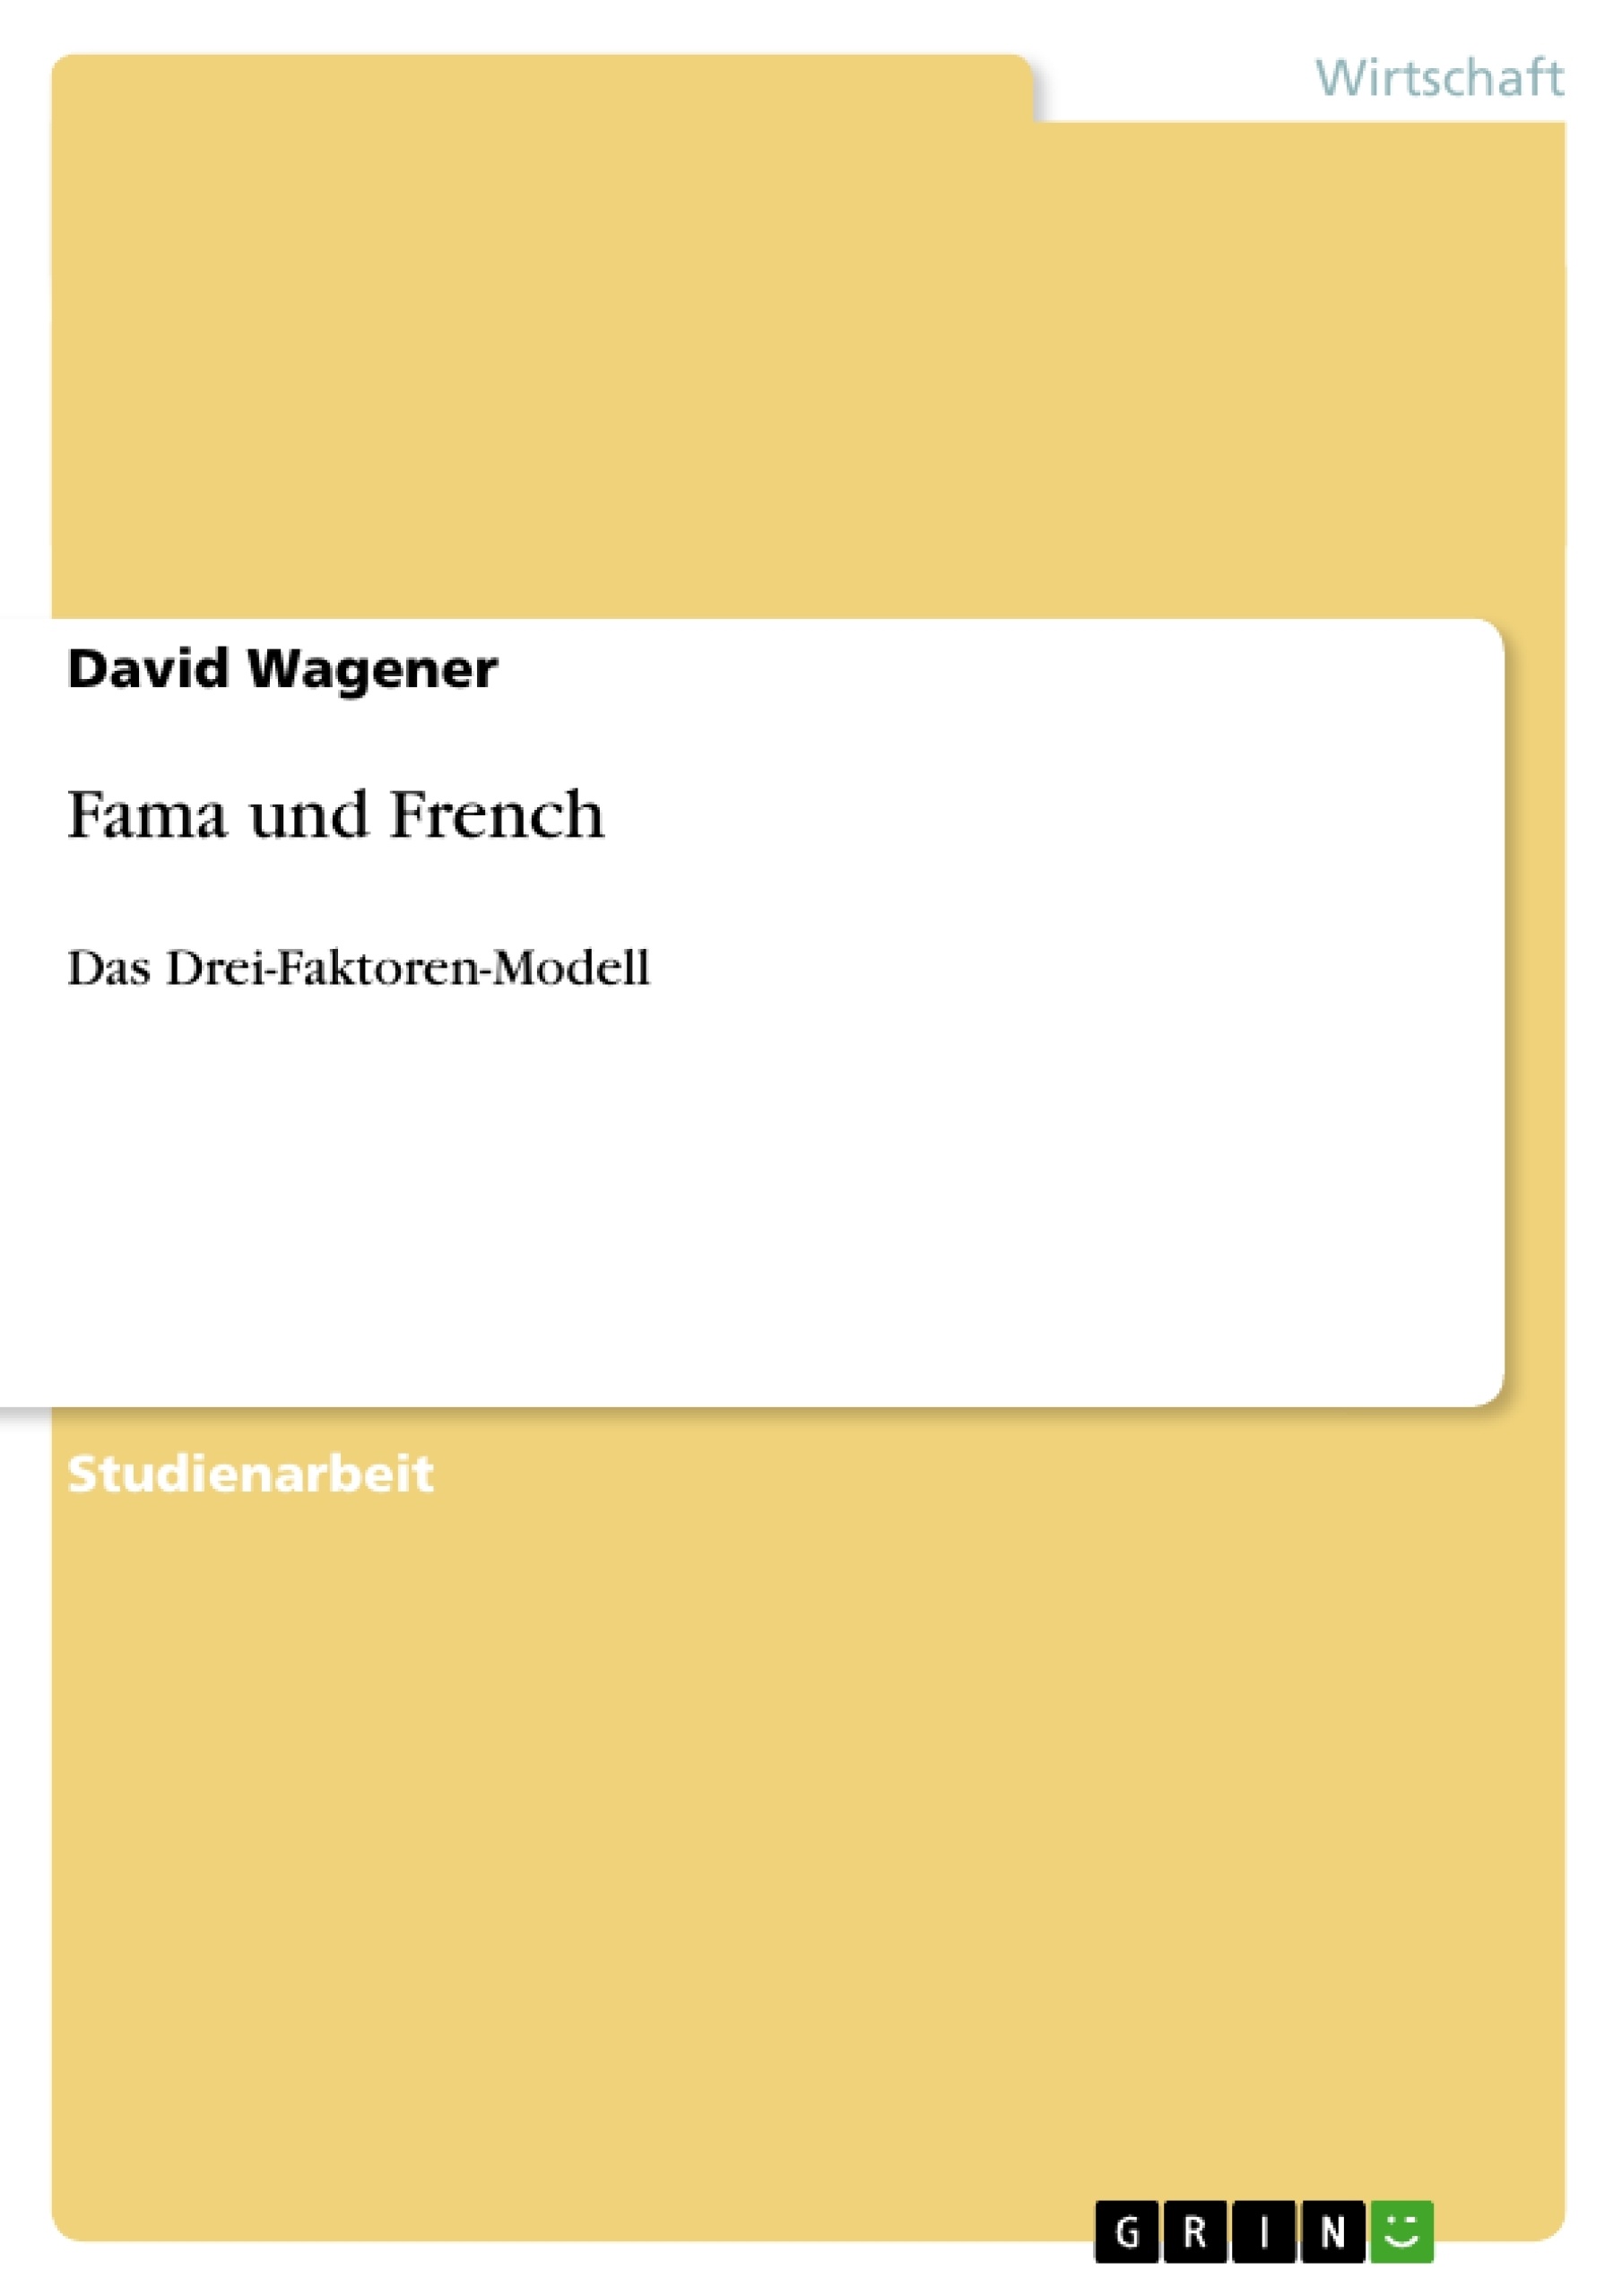 Titre: Fama und French